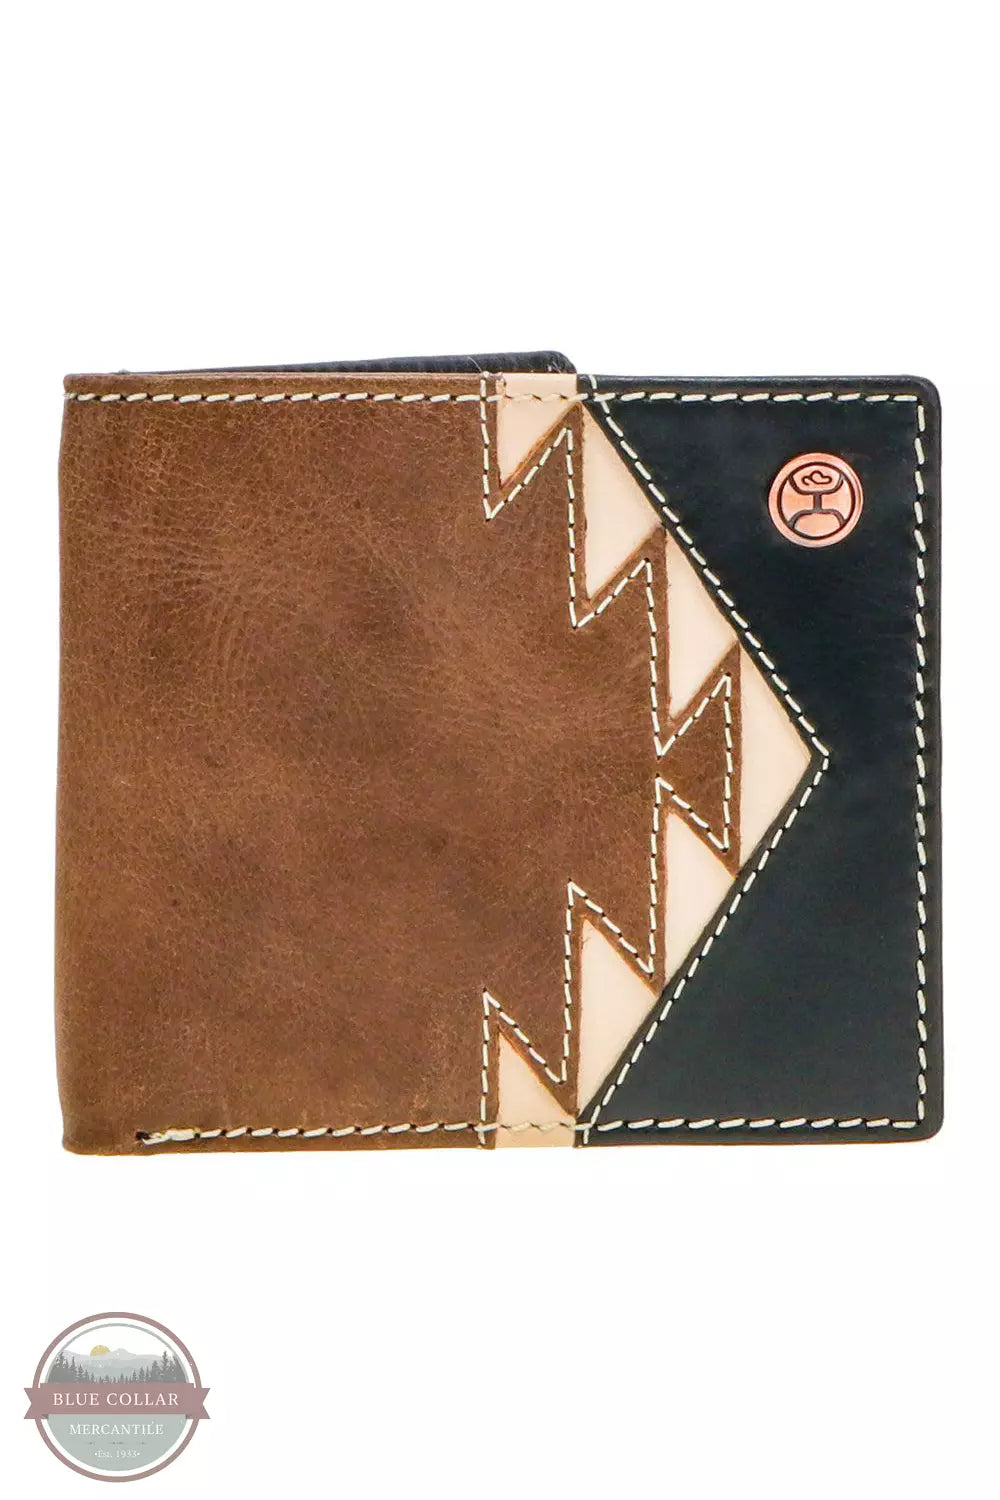 Hooey HBF006-BRBK Tonkawa Aztec Overlay Bi-Fold Wallet in Brown/Black/Ivory Front View